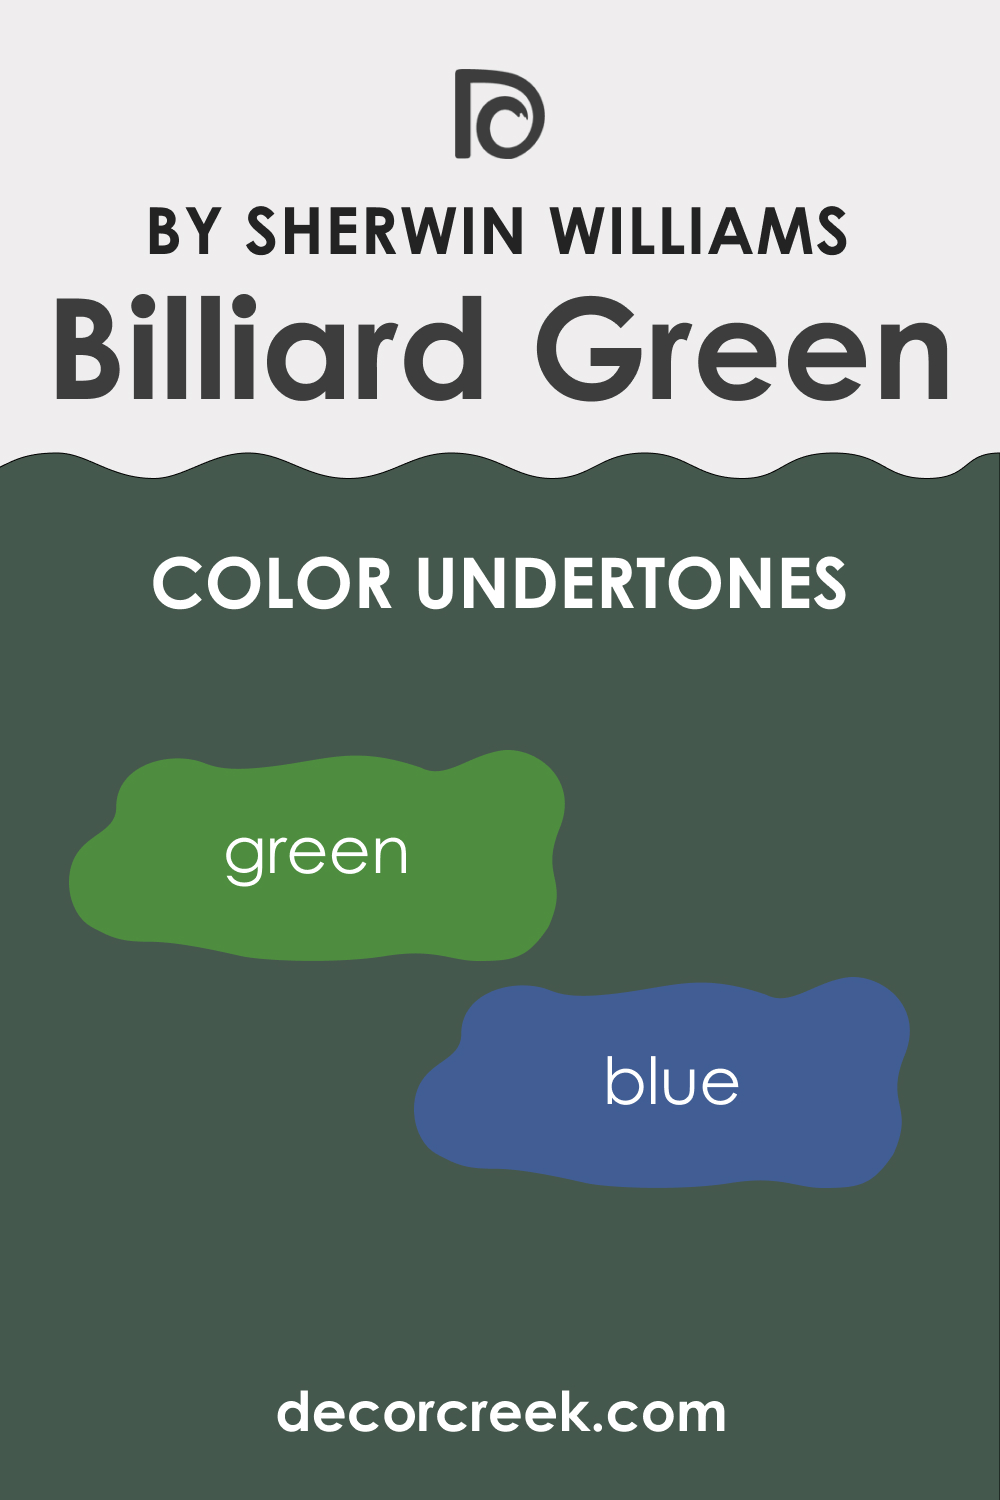 What Undertones Does SW Billiard Green Paint Color Have?